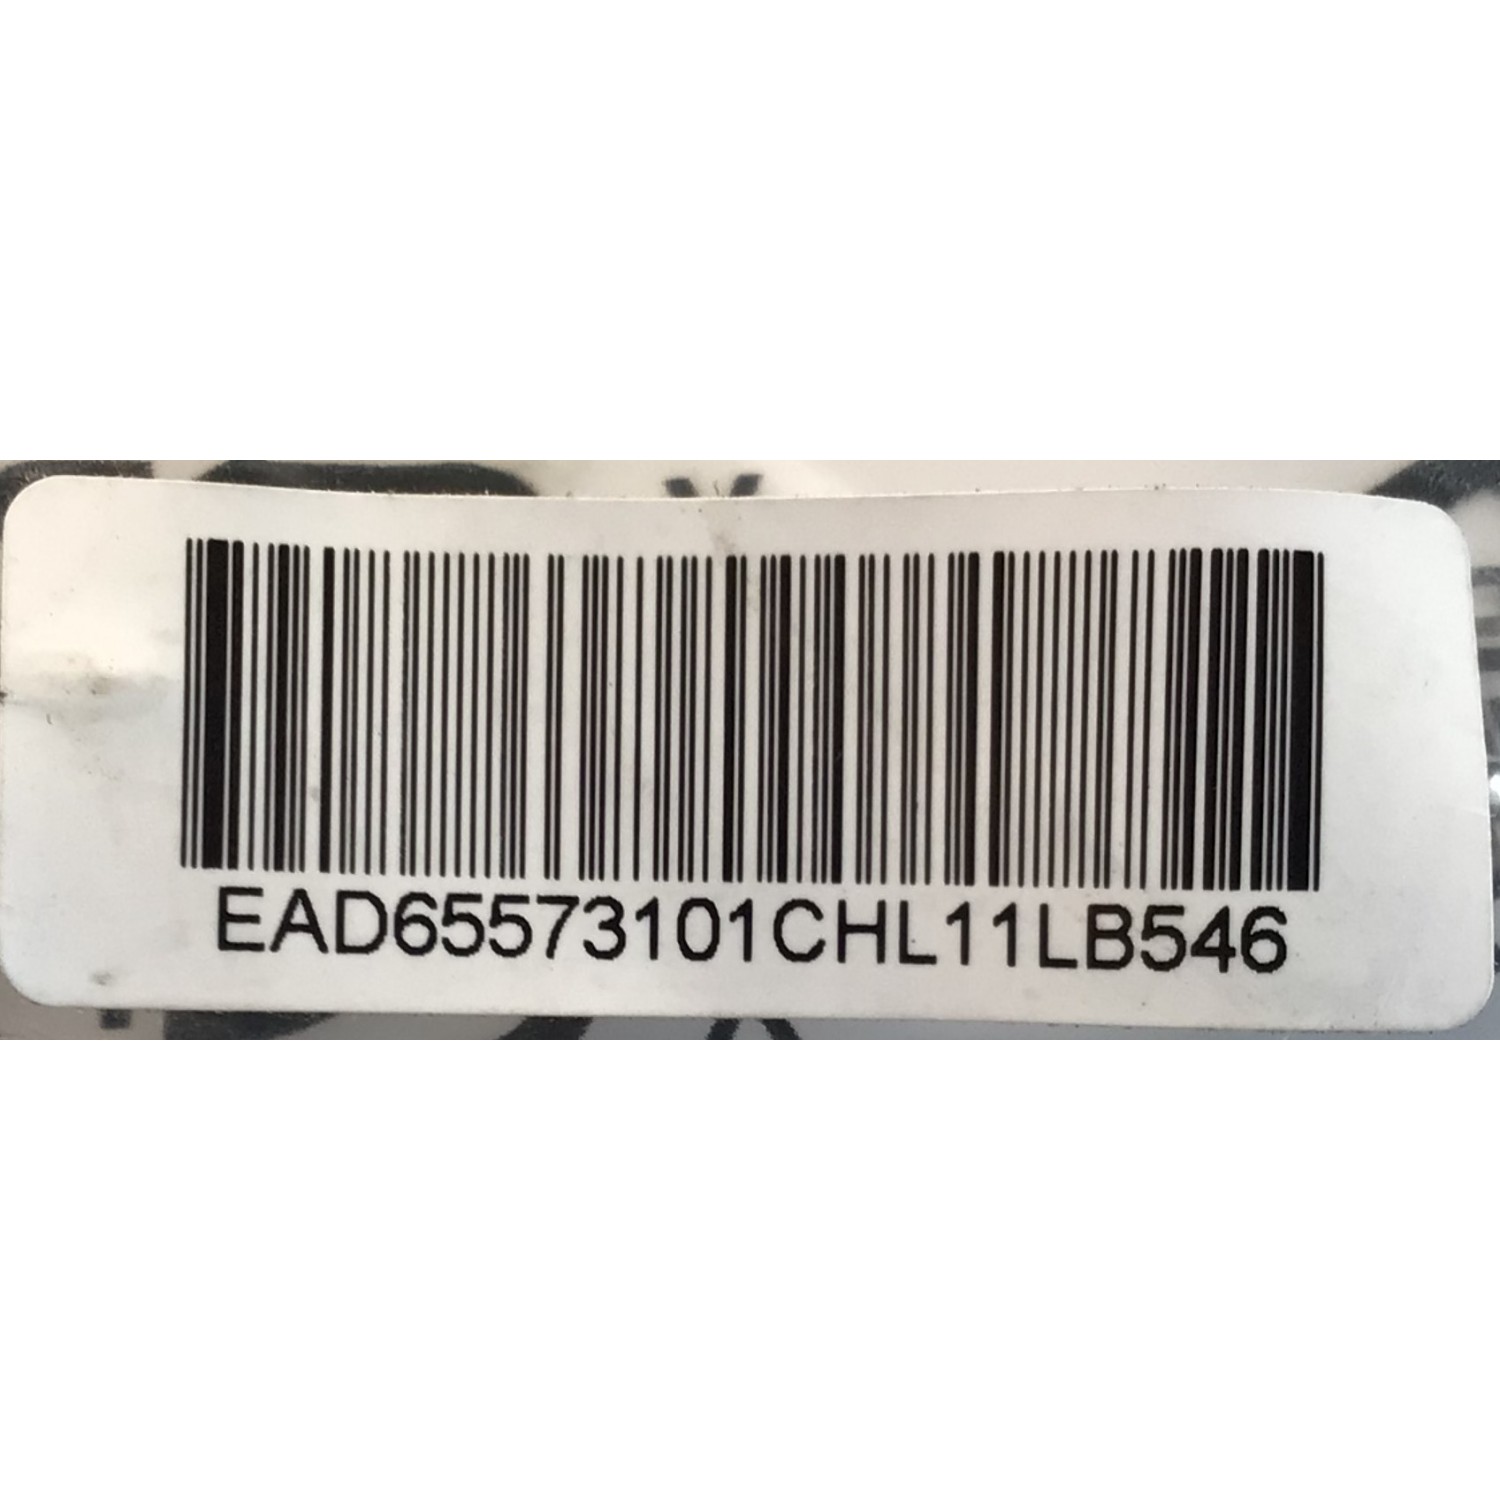 LG Monitor USB Cable EAD65573101